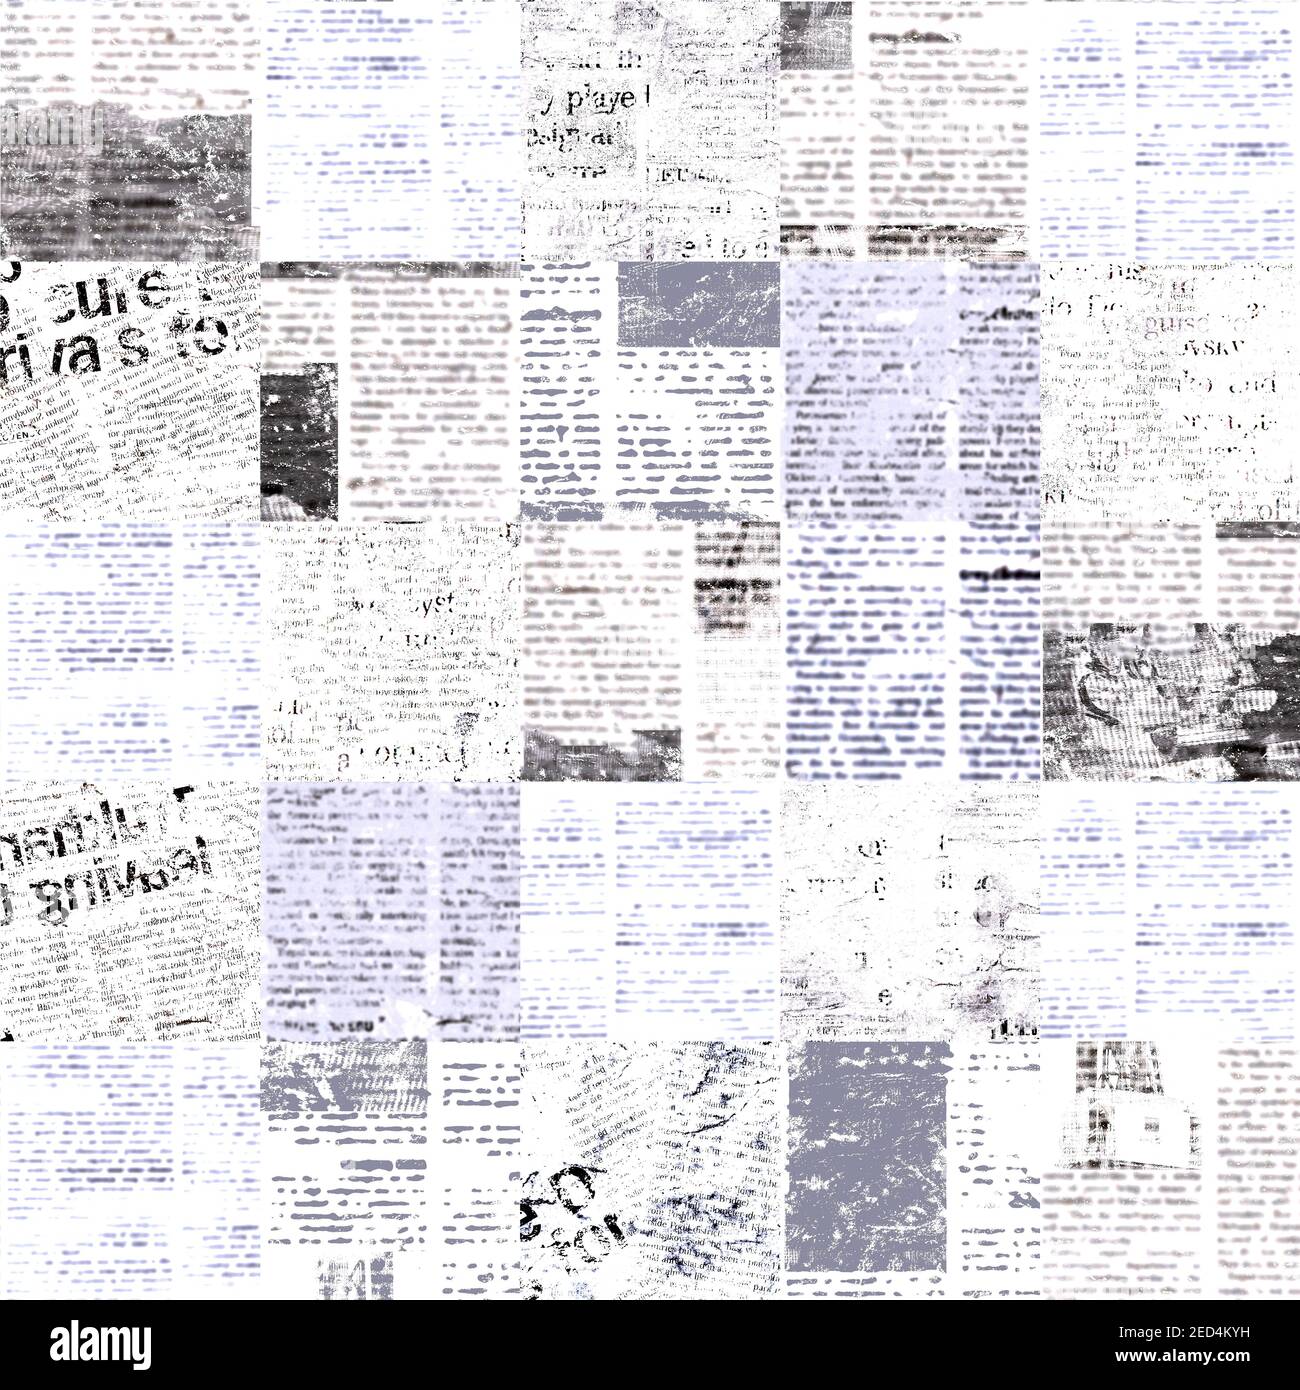 Newspaper Paper Grunge Newsprint Patchwork Seamless Pattern Background  Stock Image - Image of grunge, business: 211952615